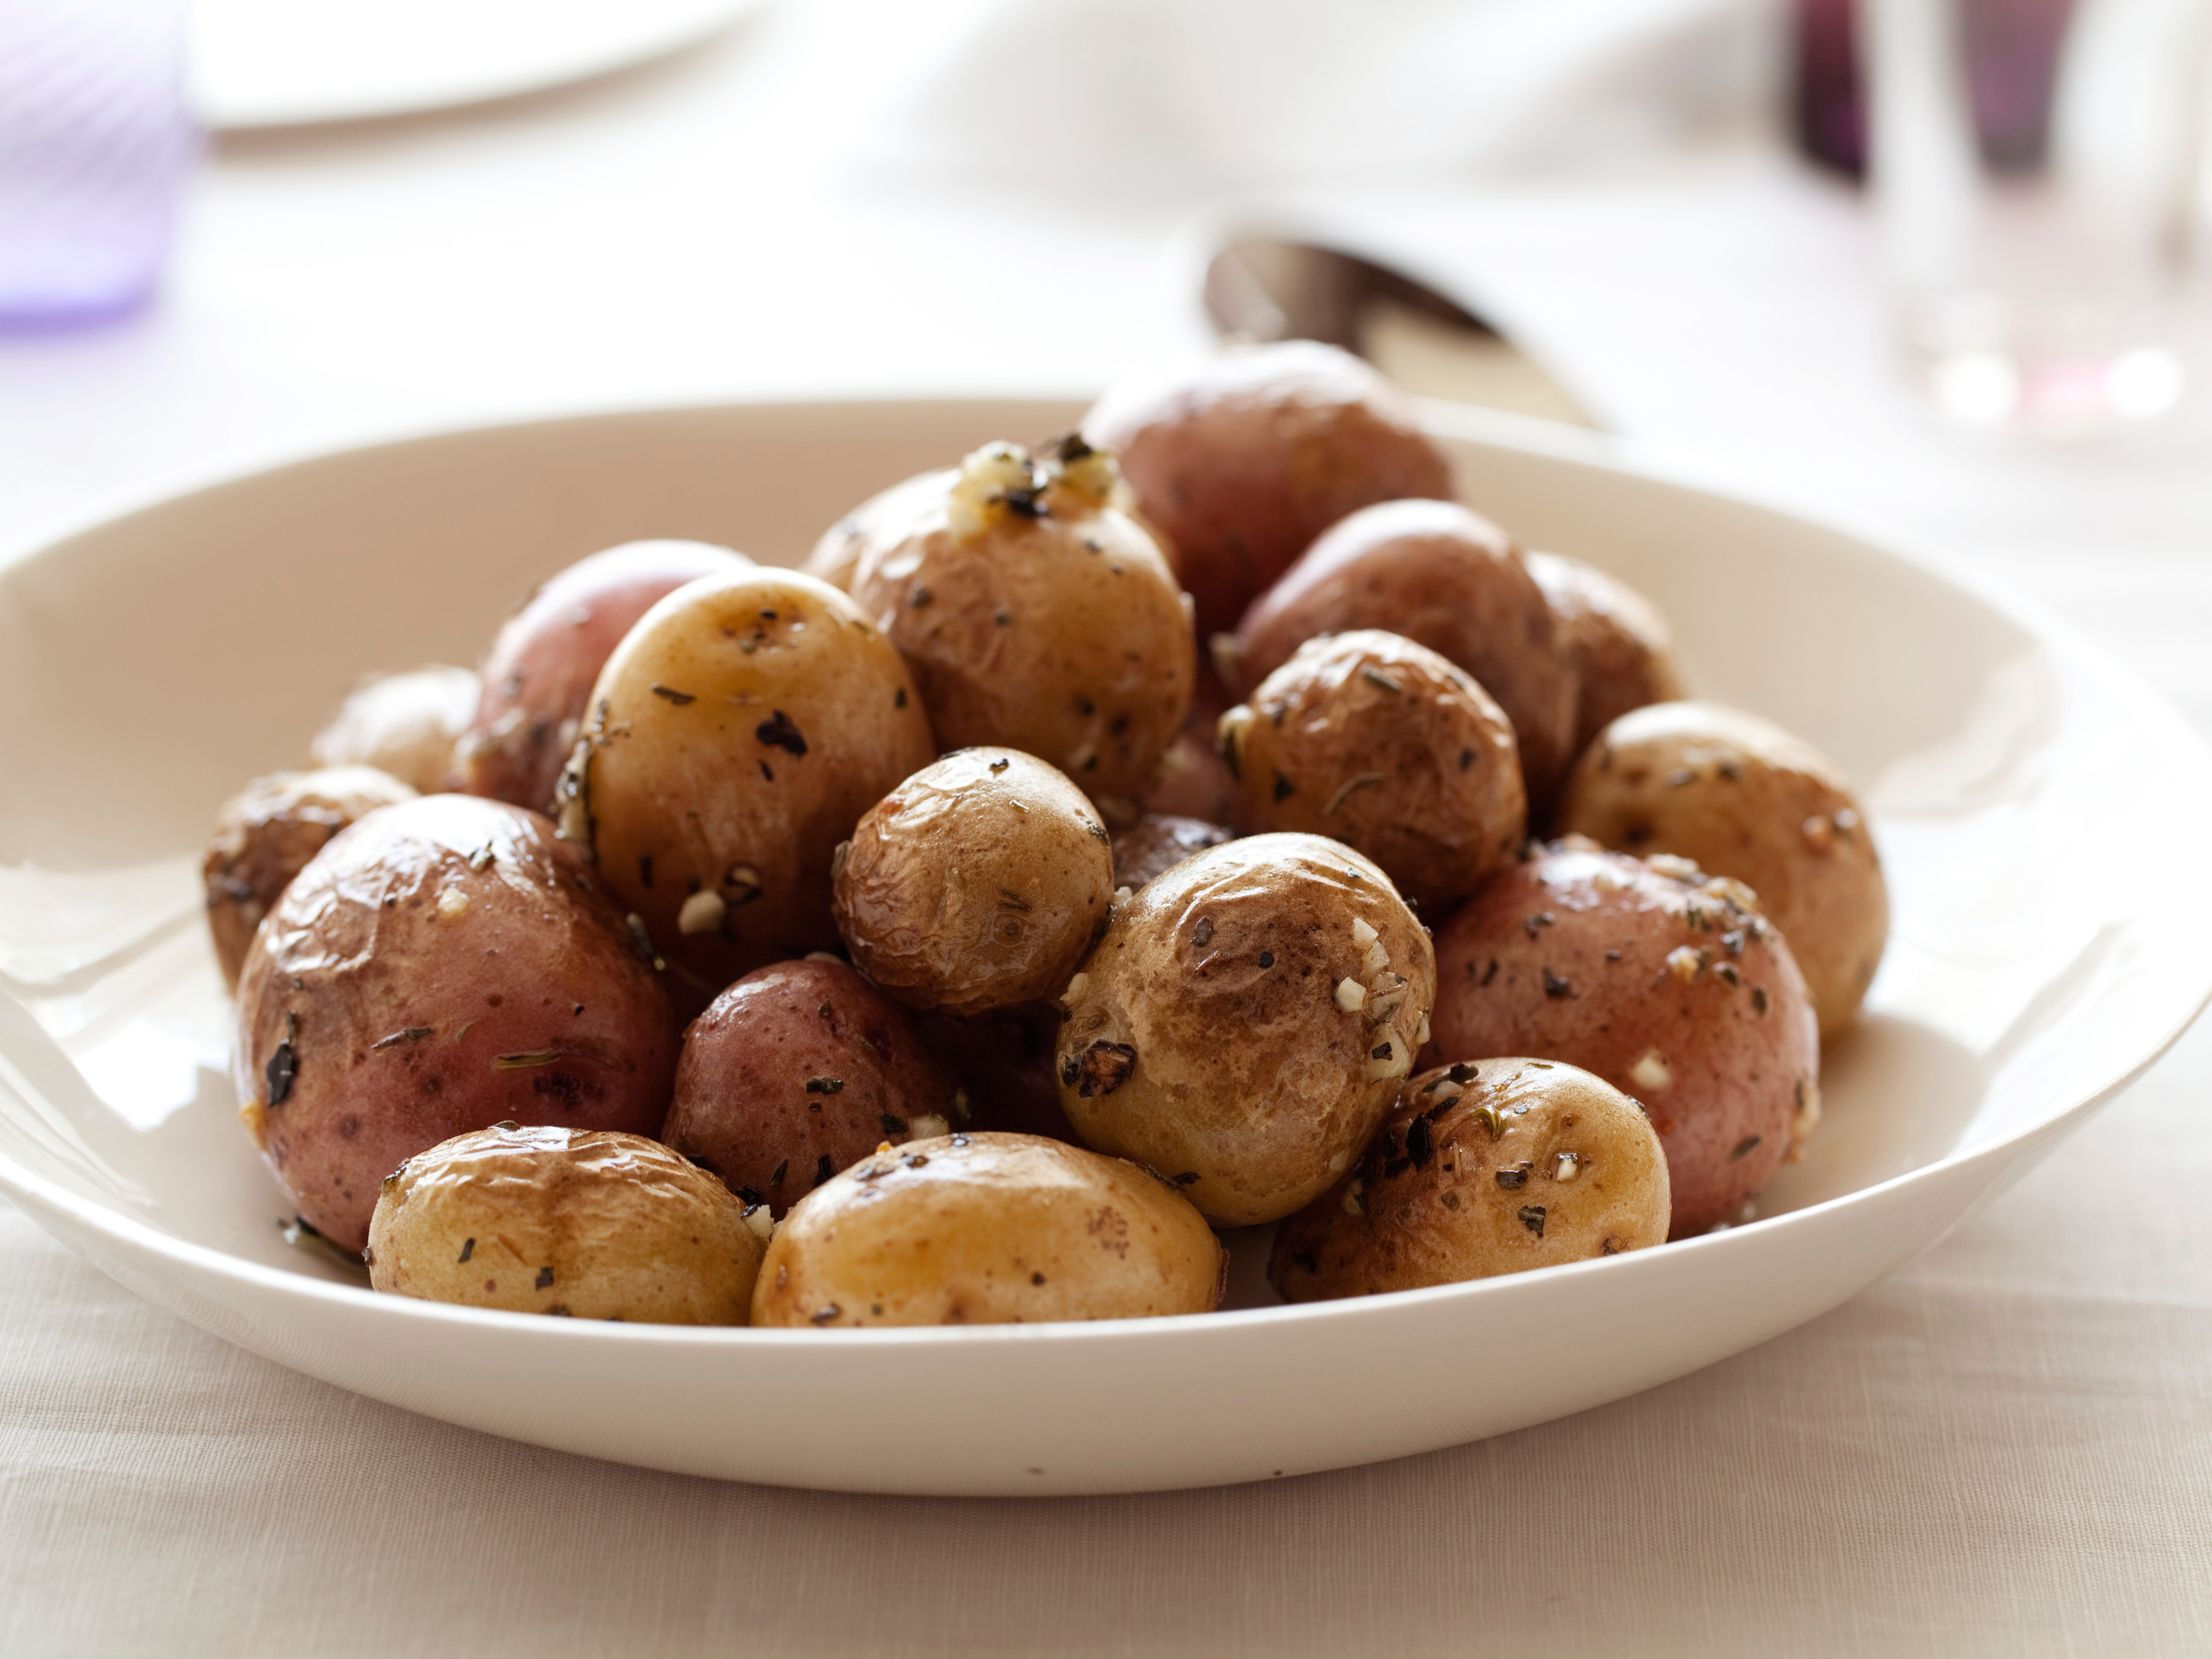 https://www.foodnetwork.com/content/dam/images/food/fullset/2011/8/30/1/cc-armendariz_roasted-baby-potatoes-with-herbs-recipe_s4x3.jpg